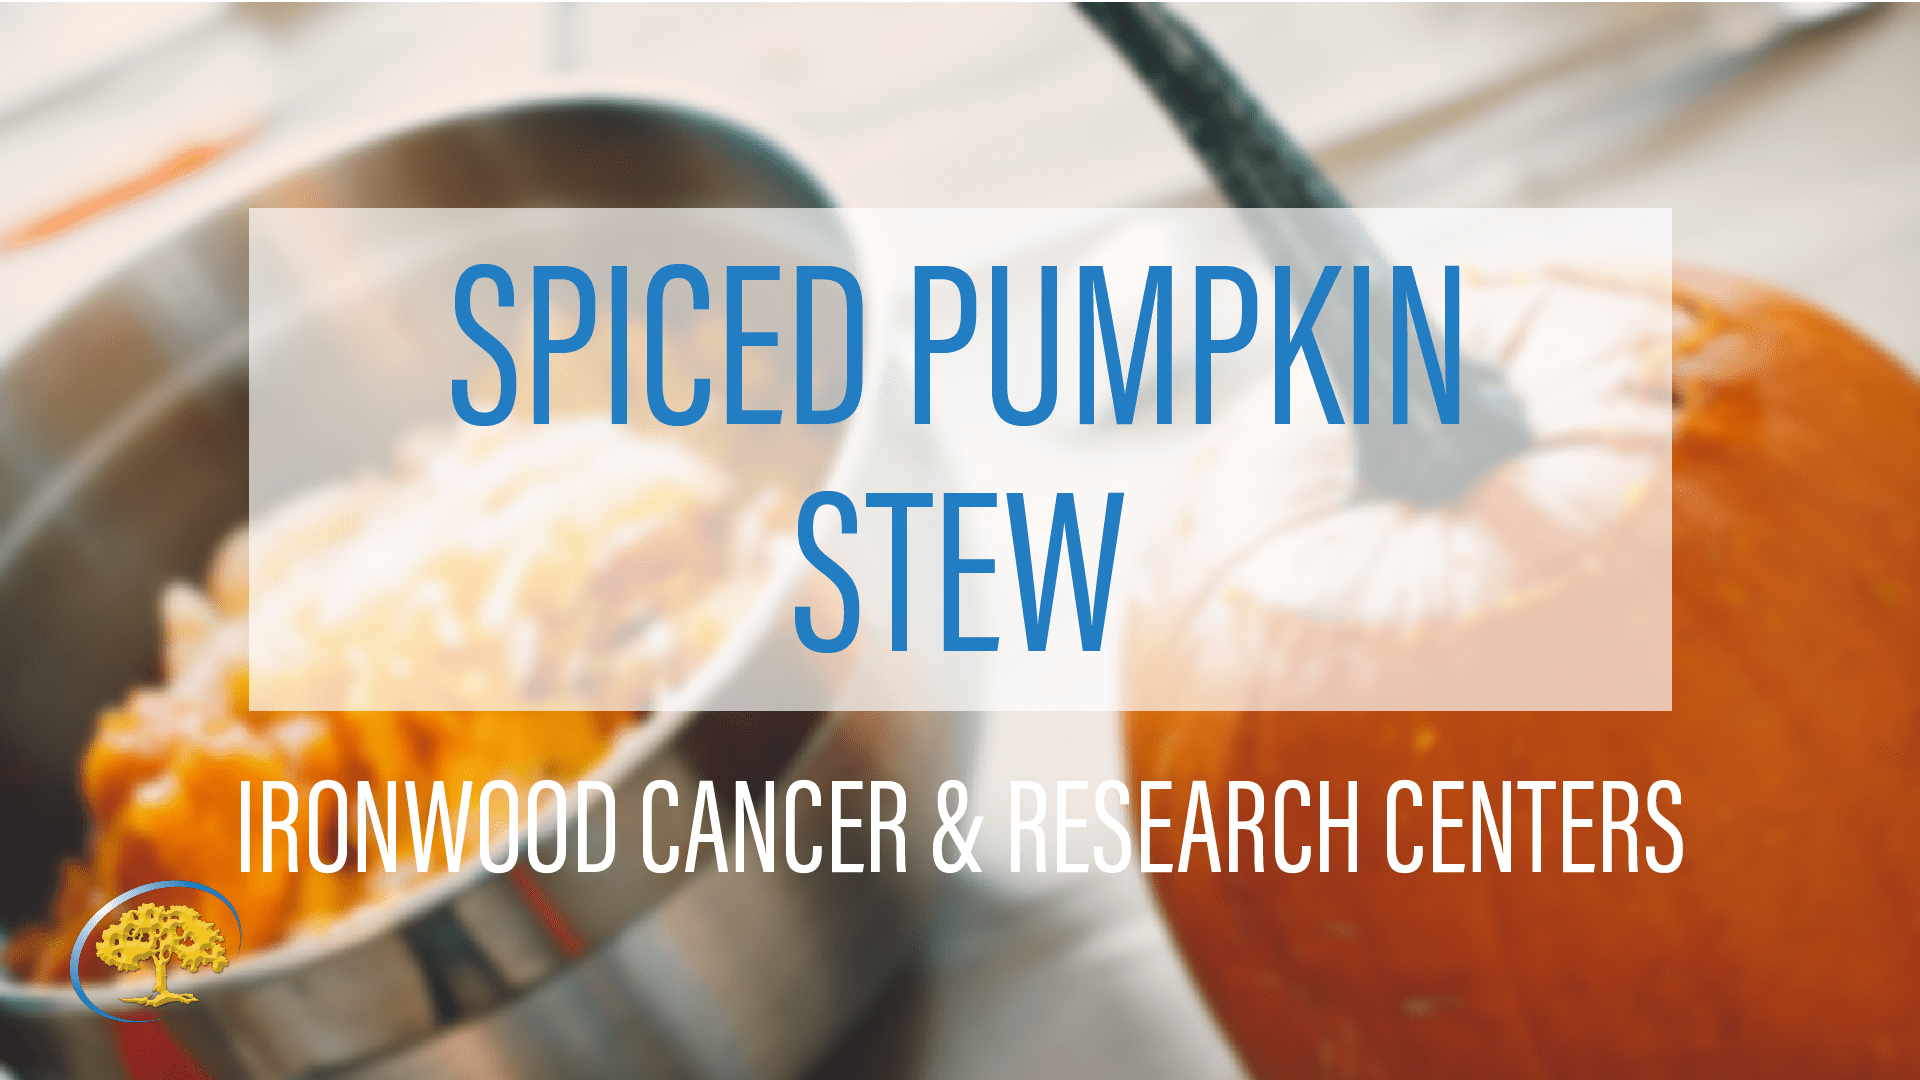 Spiced Pumpkin Stew Ironwood Cancer & Research Centers